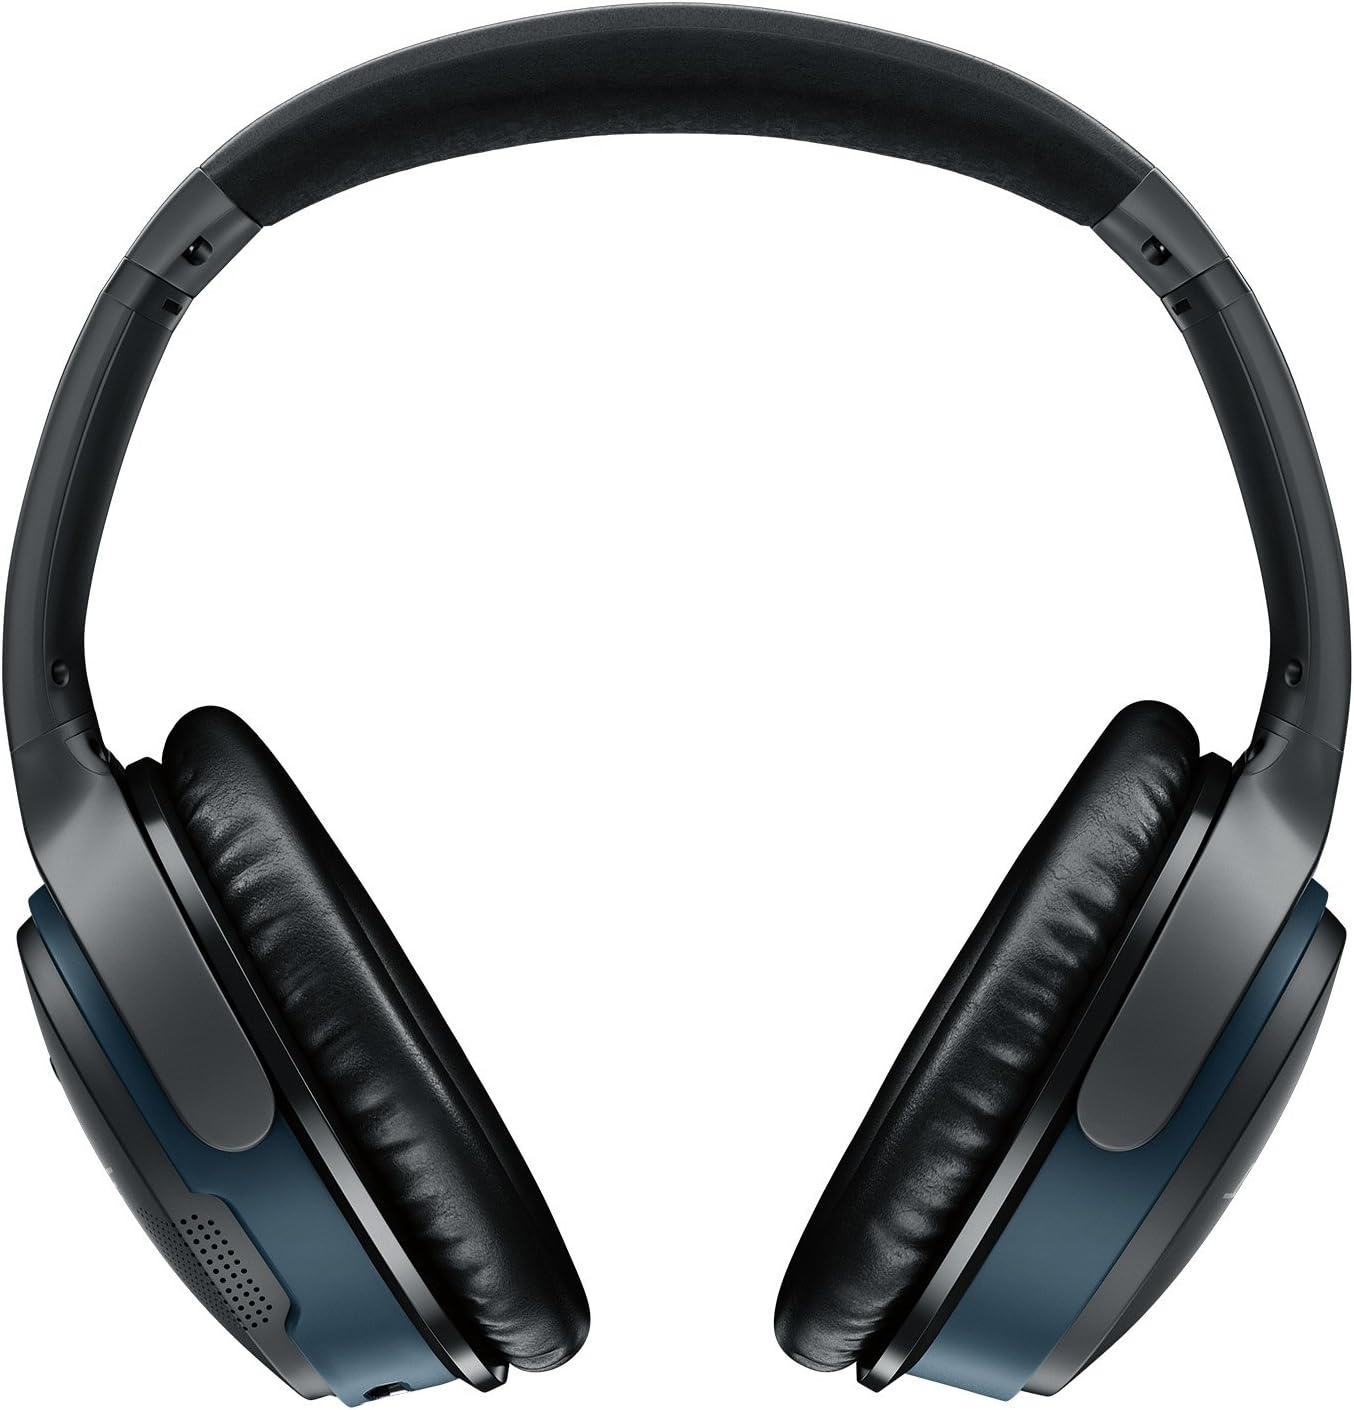 Bose SoundLink Wireless Around-Ear Headphones II - Black (Pre-Owned)